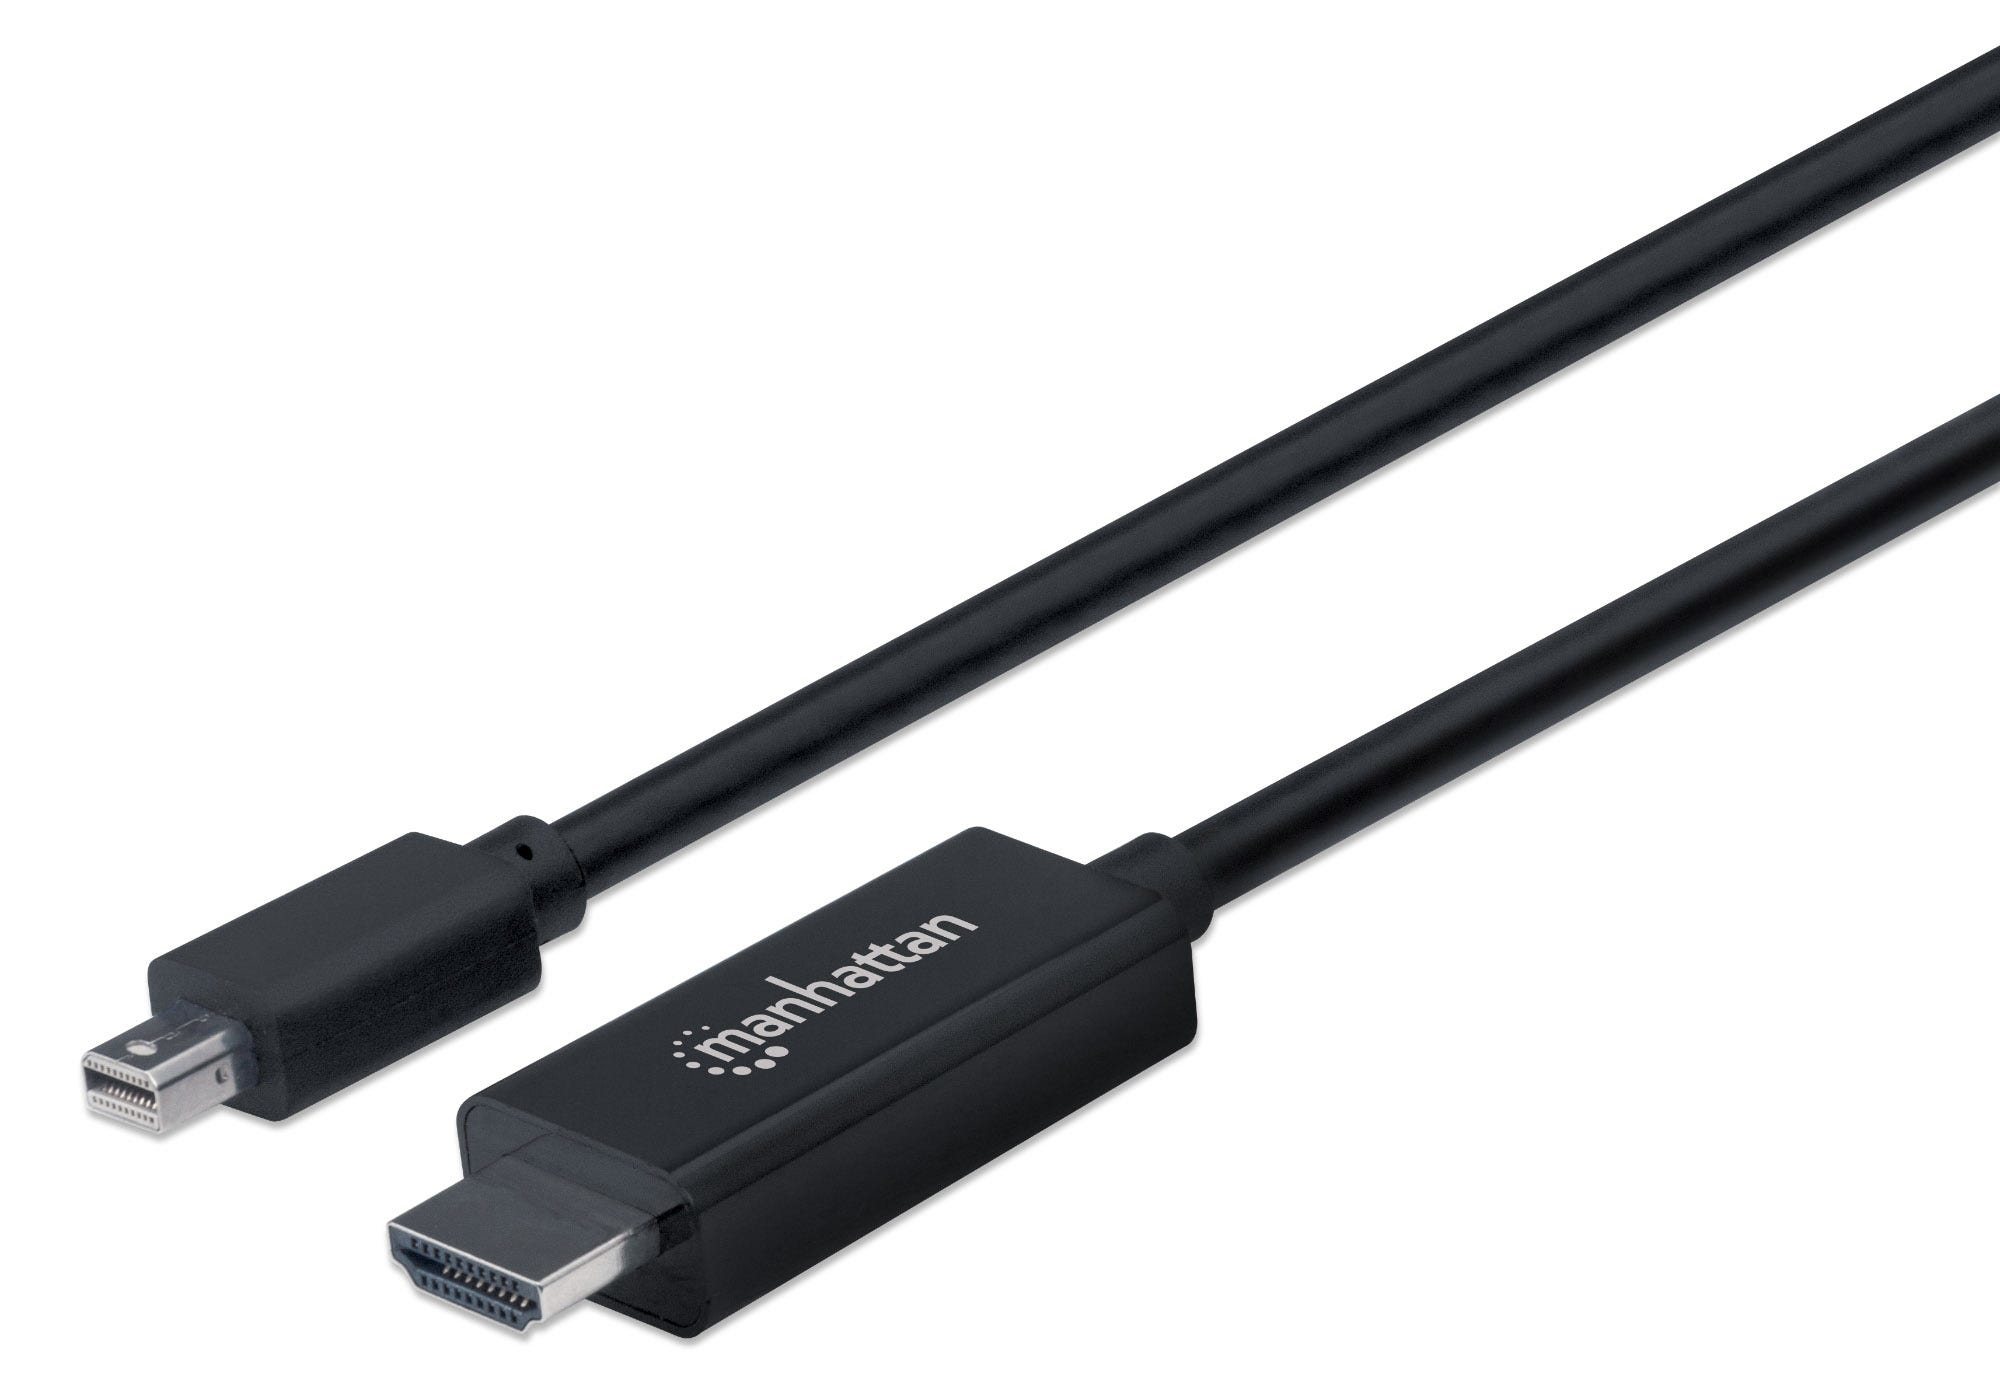 Photos - Cable (video, audio, USB) MANHATTAN Mini DisplayPort 1.1 to HDMI Cable, 1080p@60Hz, 1.8m, Male t 153 